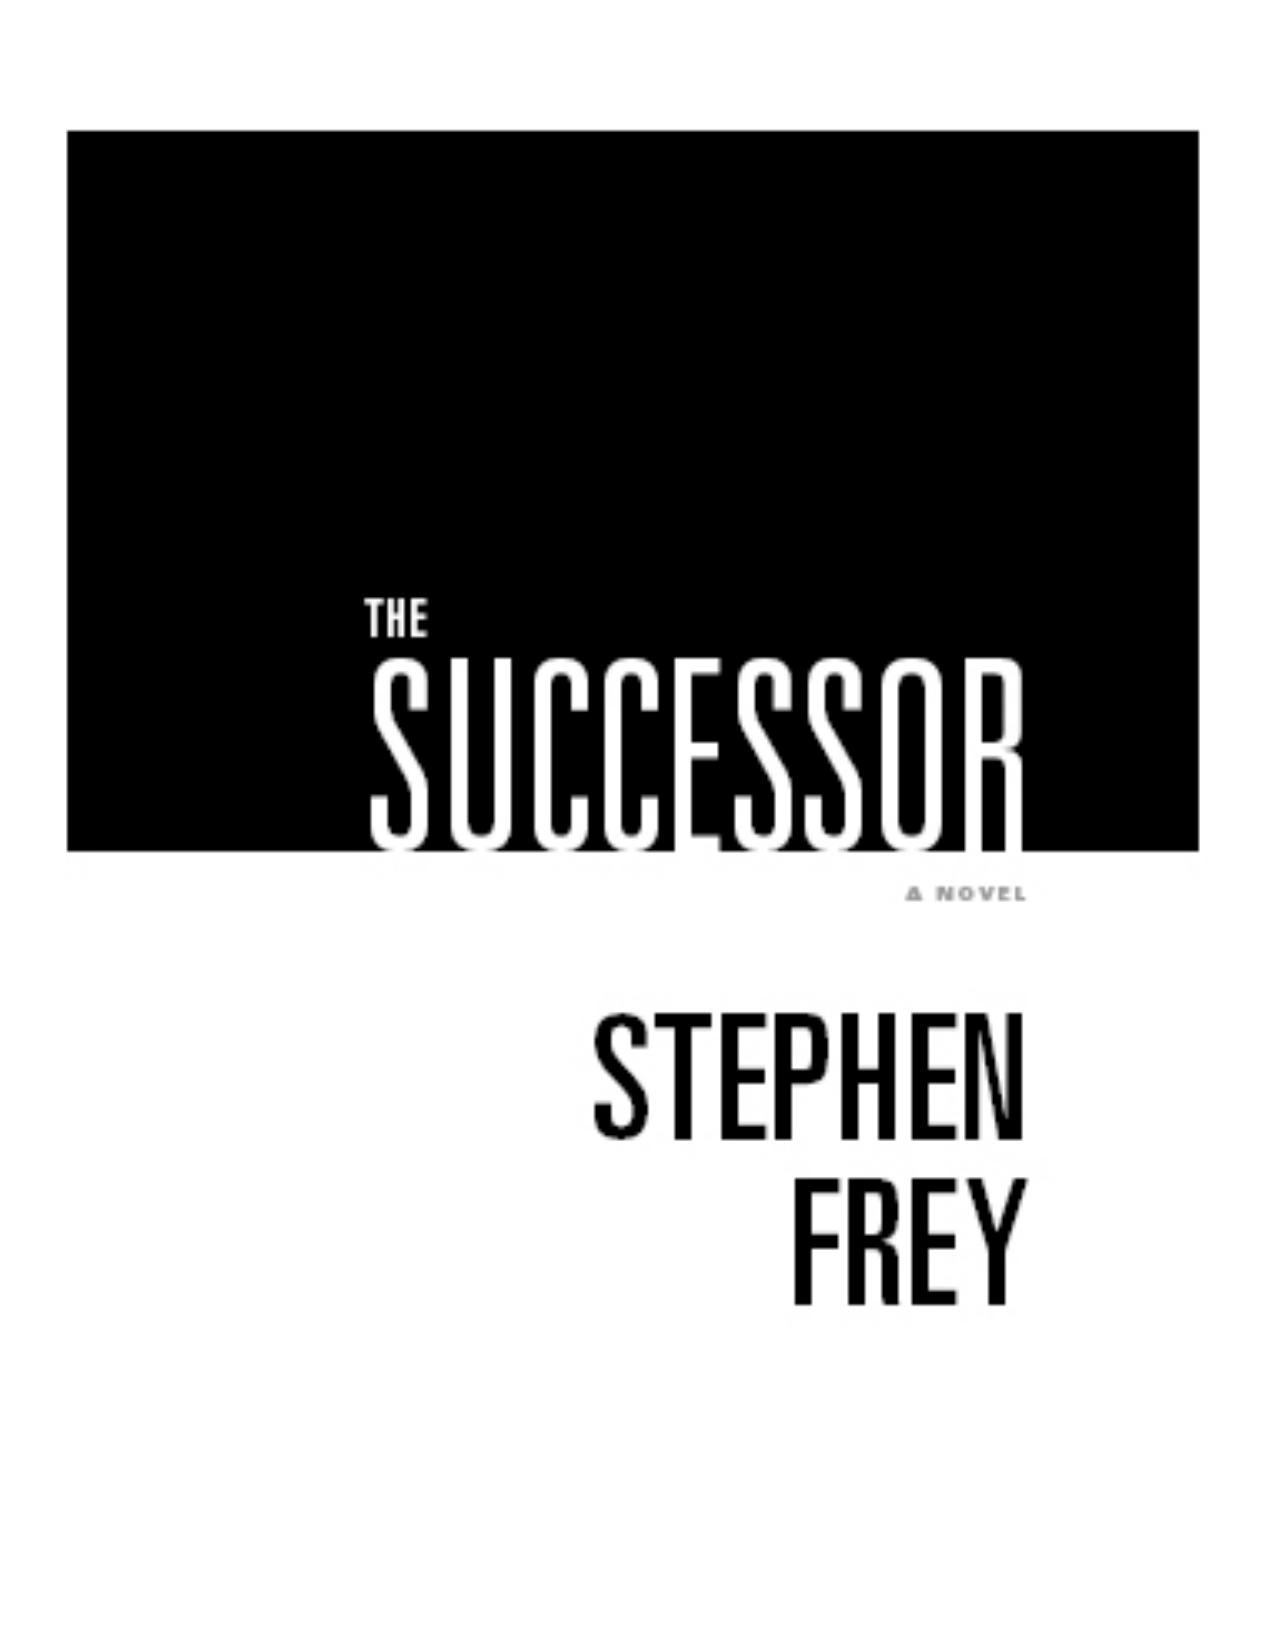 The Successor: A Novel by Stephen Frey